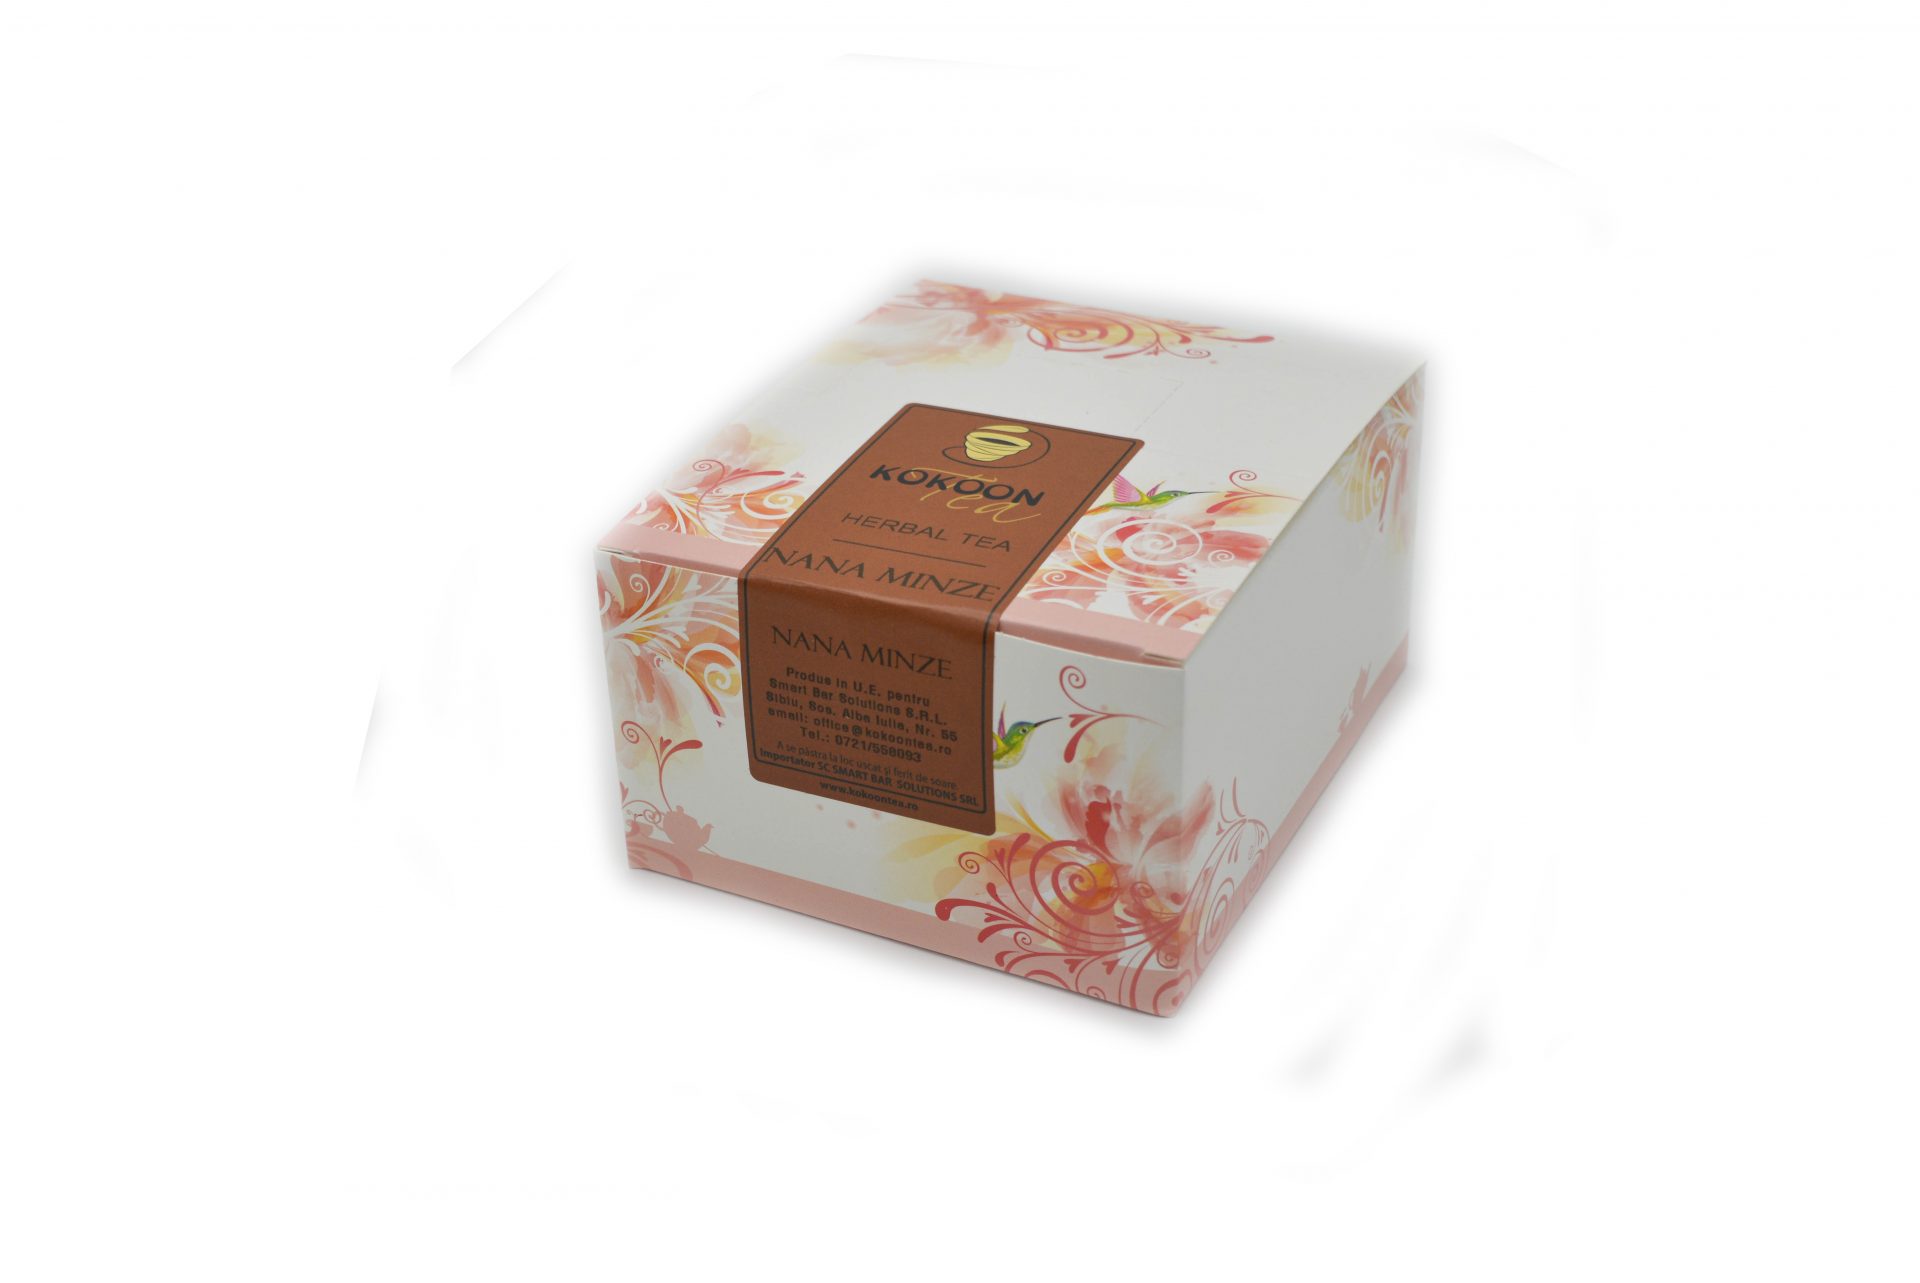 Ceai plic - Kokoon Tea Nana Minze 20pl/cut, smartbarsolutions.ro